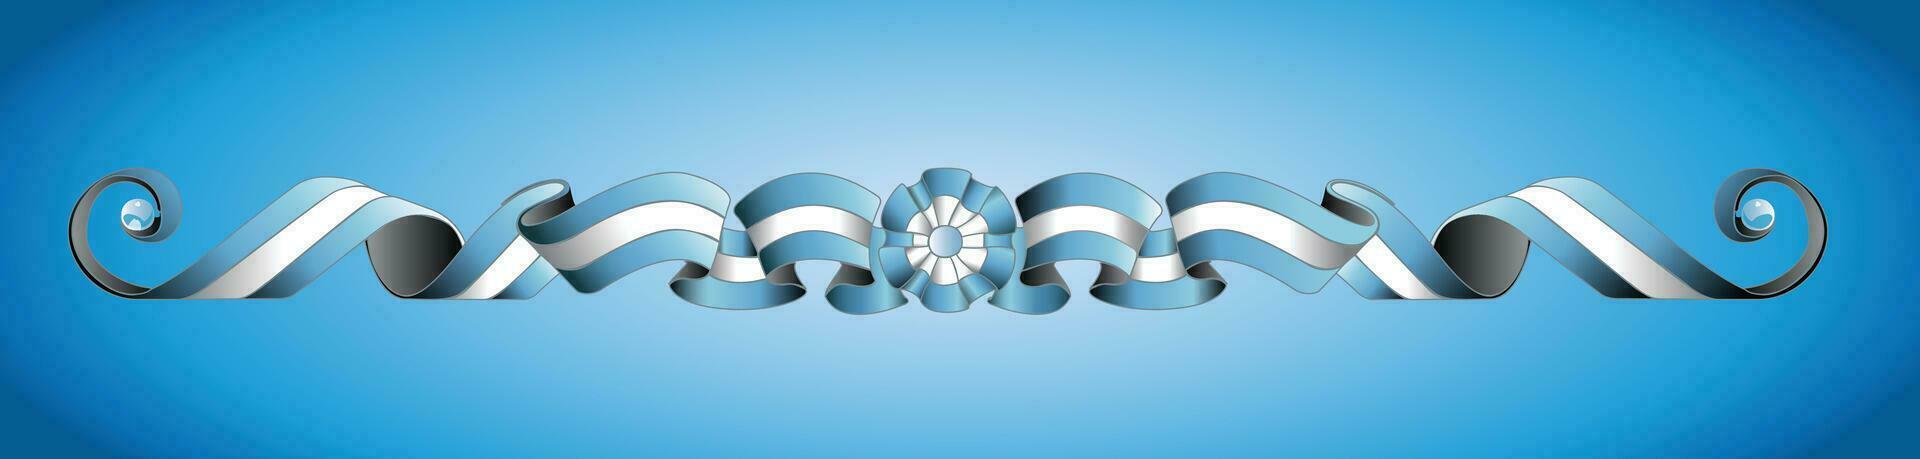 Argentijns vlag gefiled porteno Argentijns ontwerp canvas schilderij vector